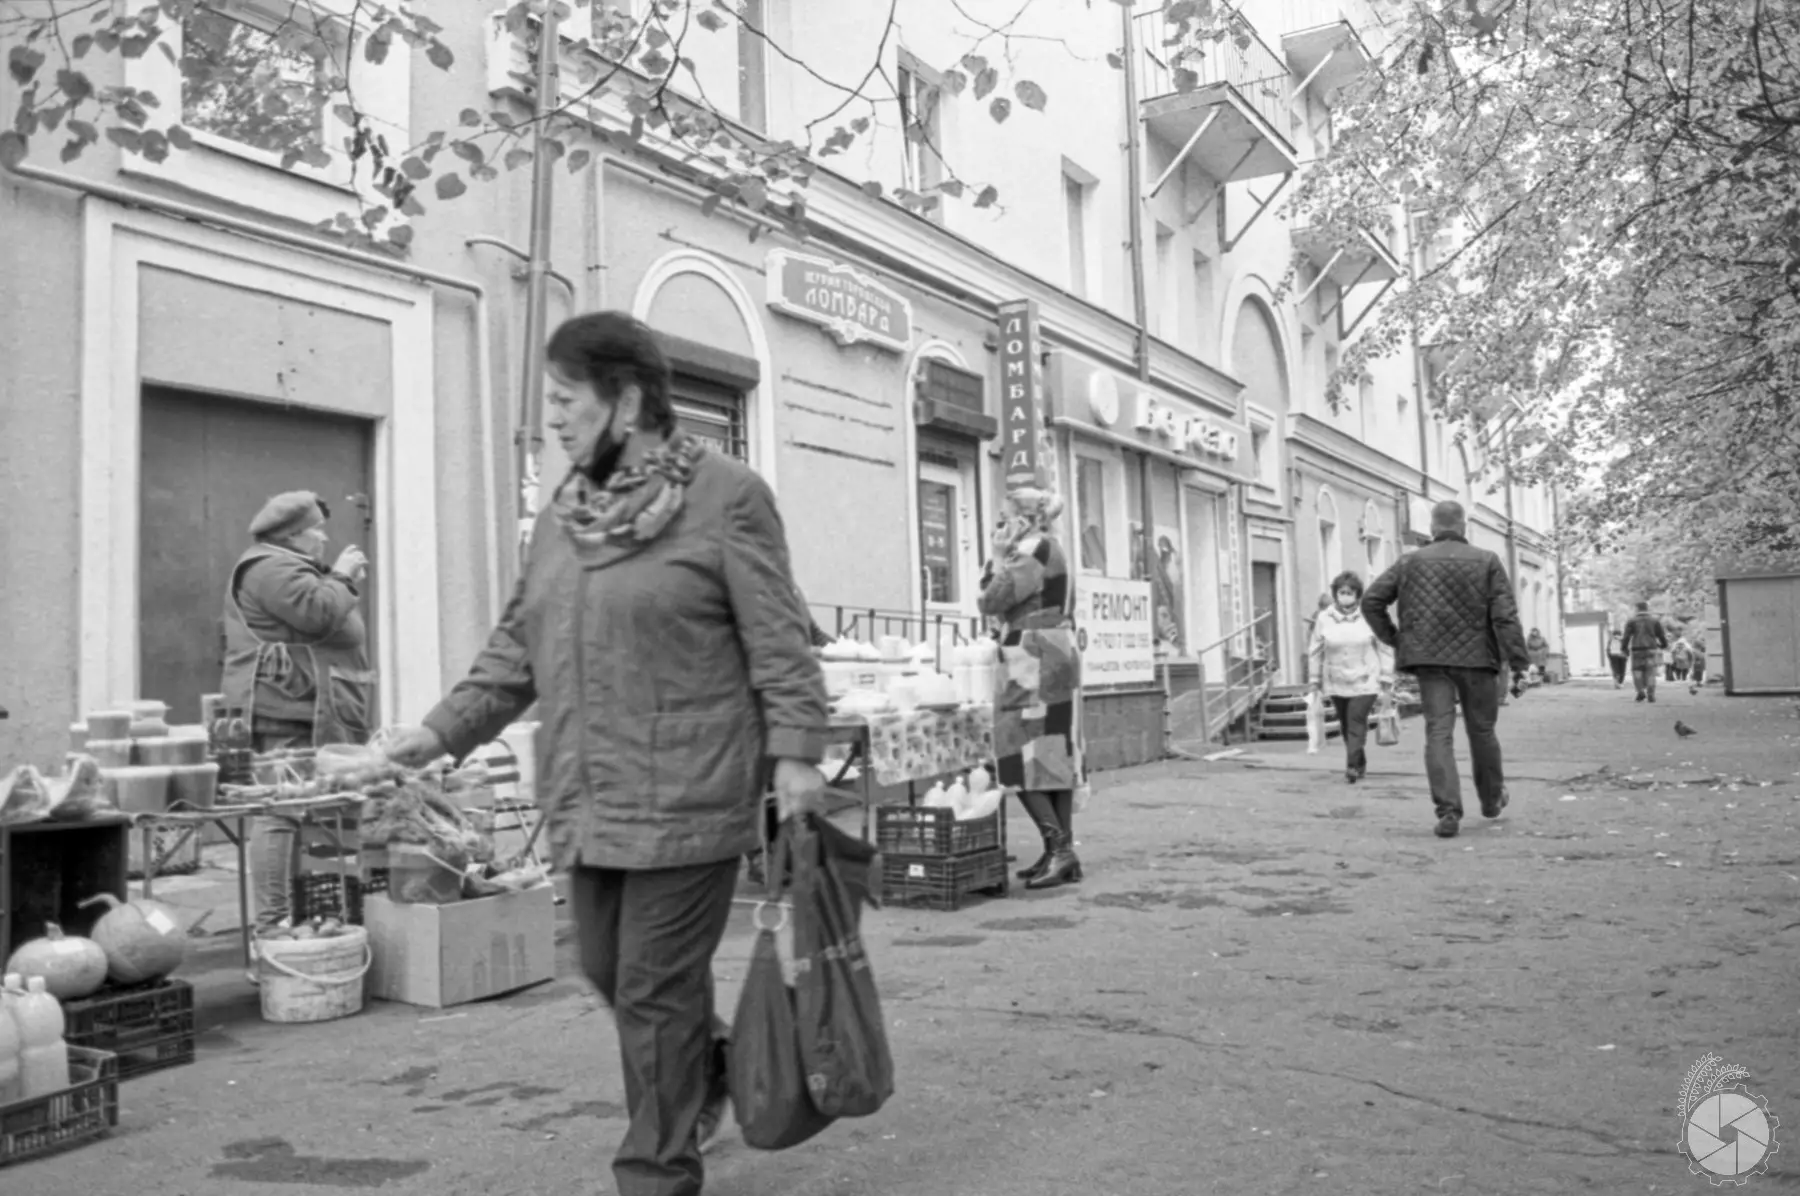 Kievskaya Street is former Ponarth's axis #2